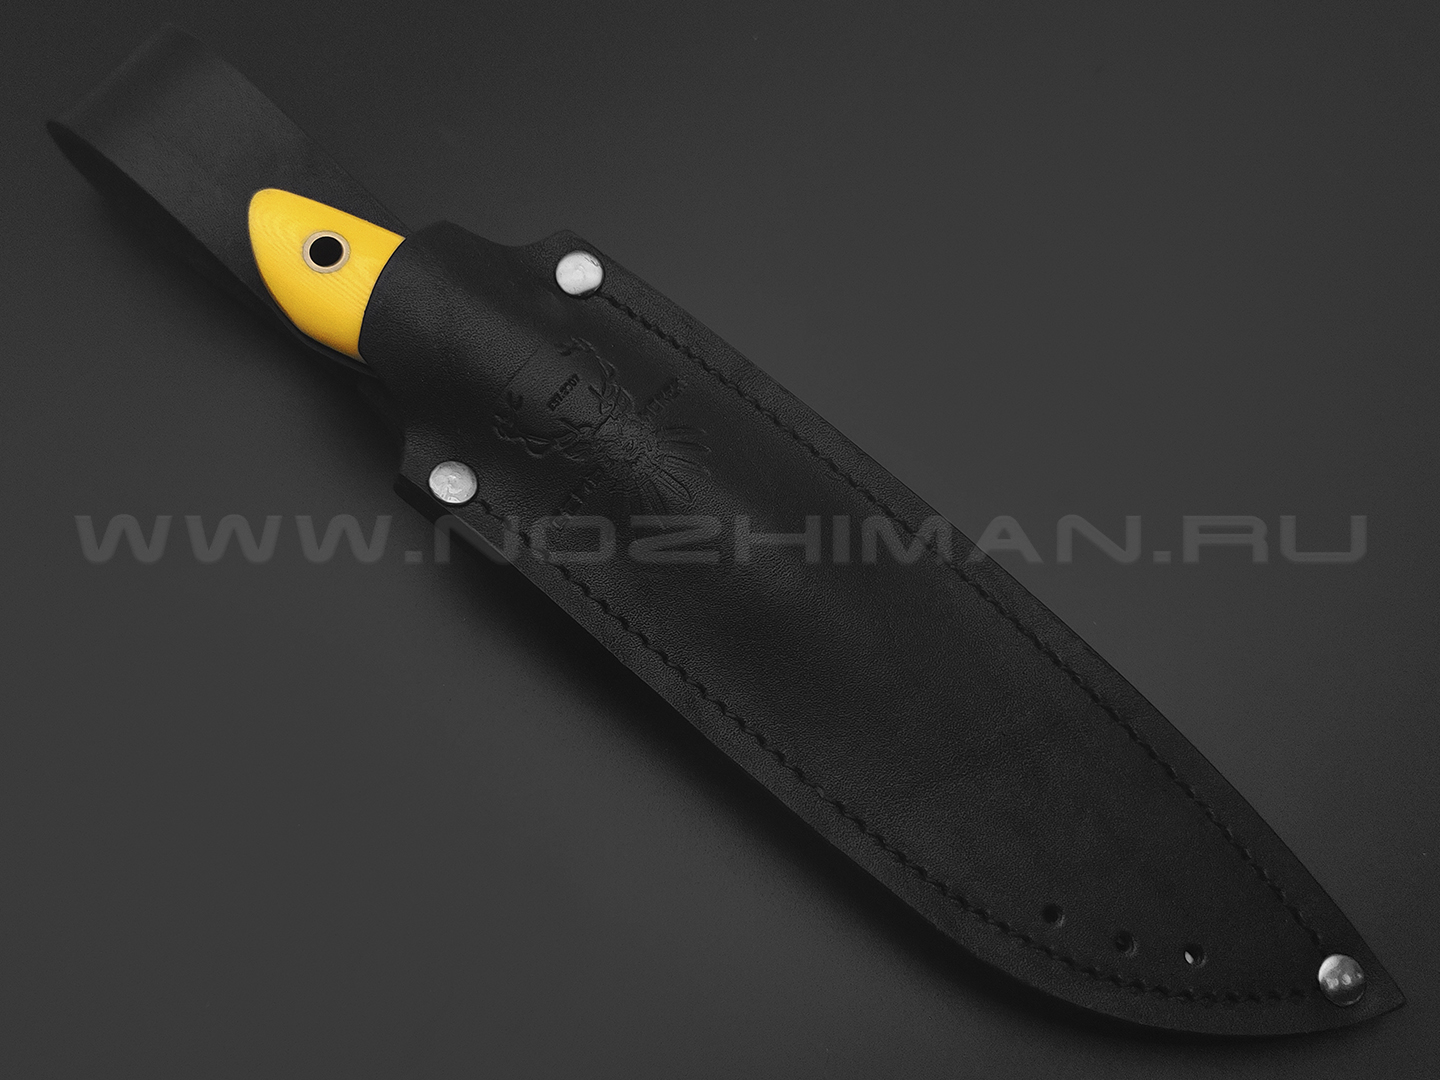 7 ножей нож Ц2 сталь Aus-10Co satin, рукоять G10 yellow & black